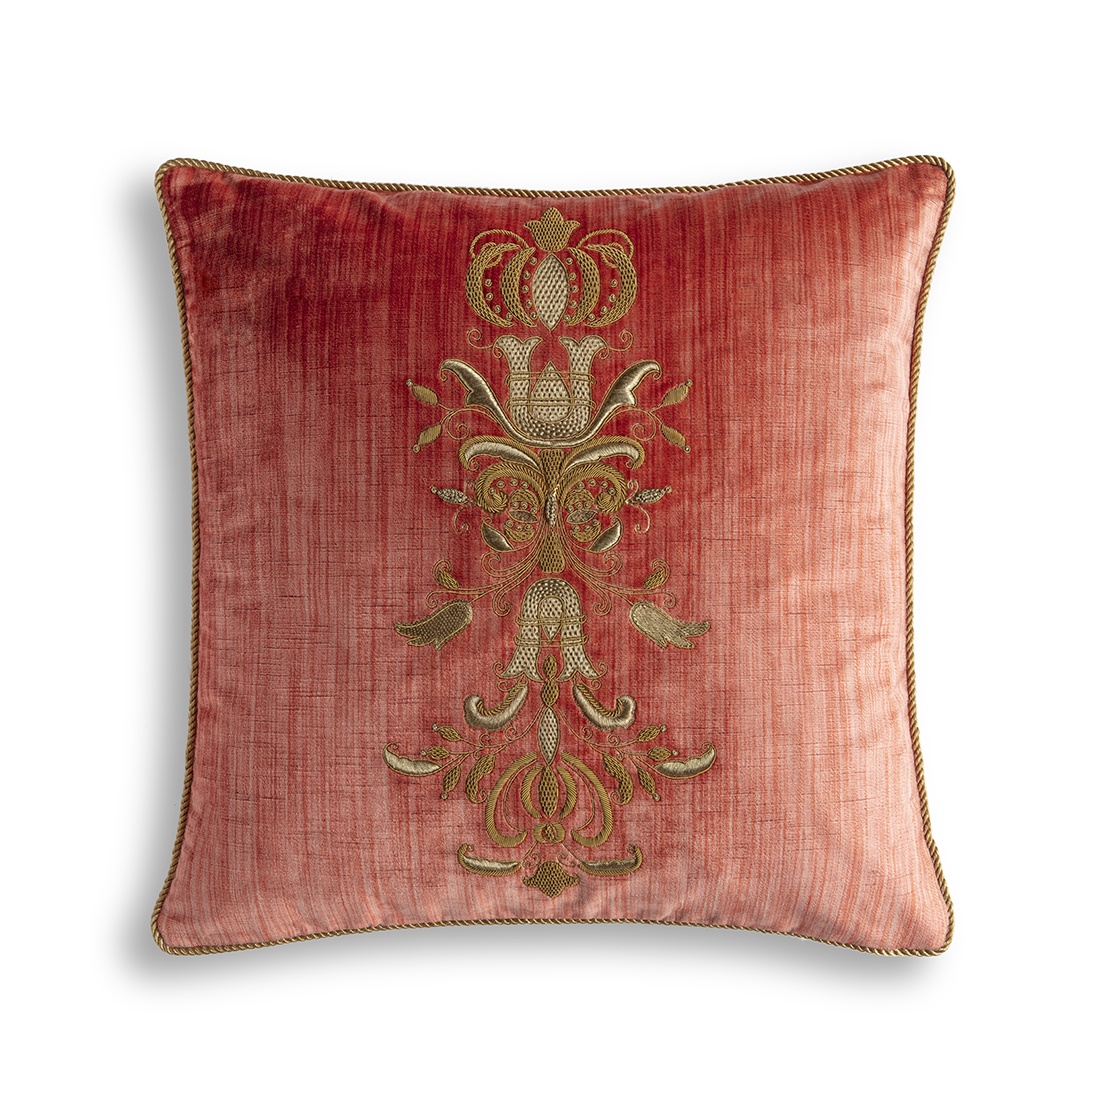 Zola cushion in Como silk velvet -  Pompeiian red